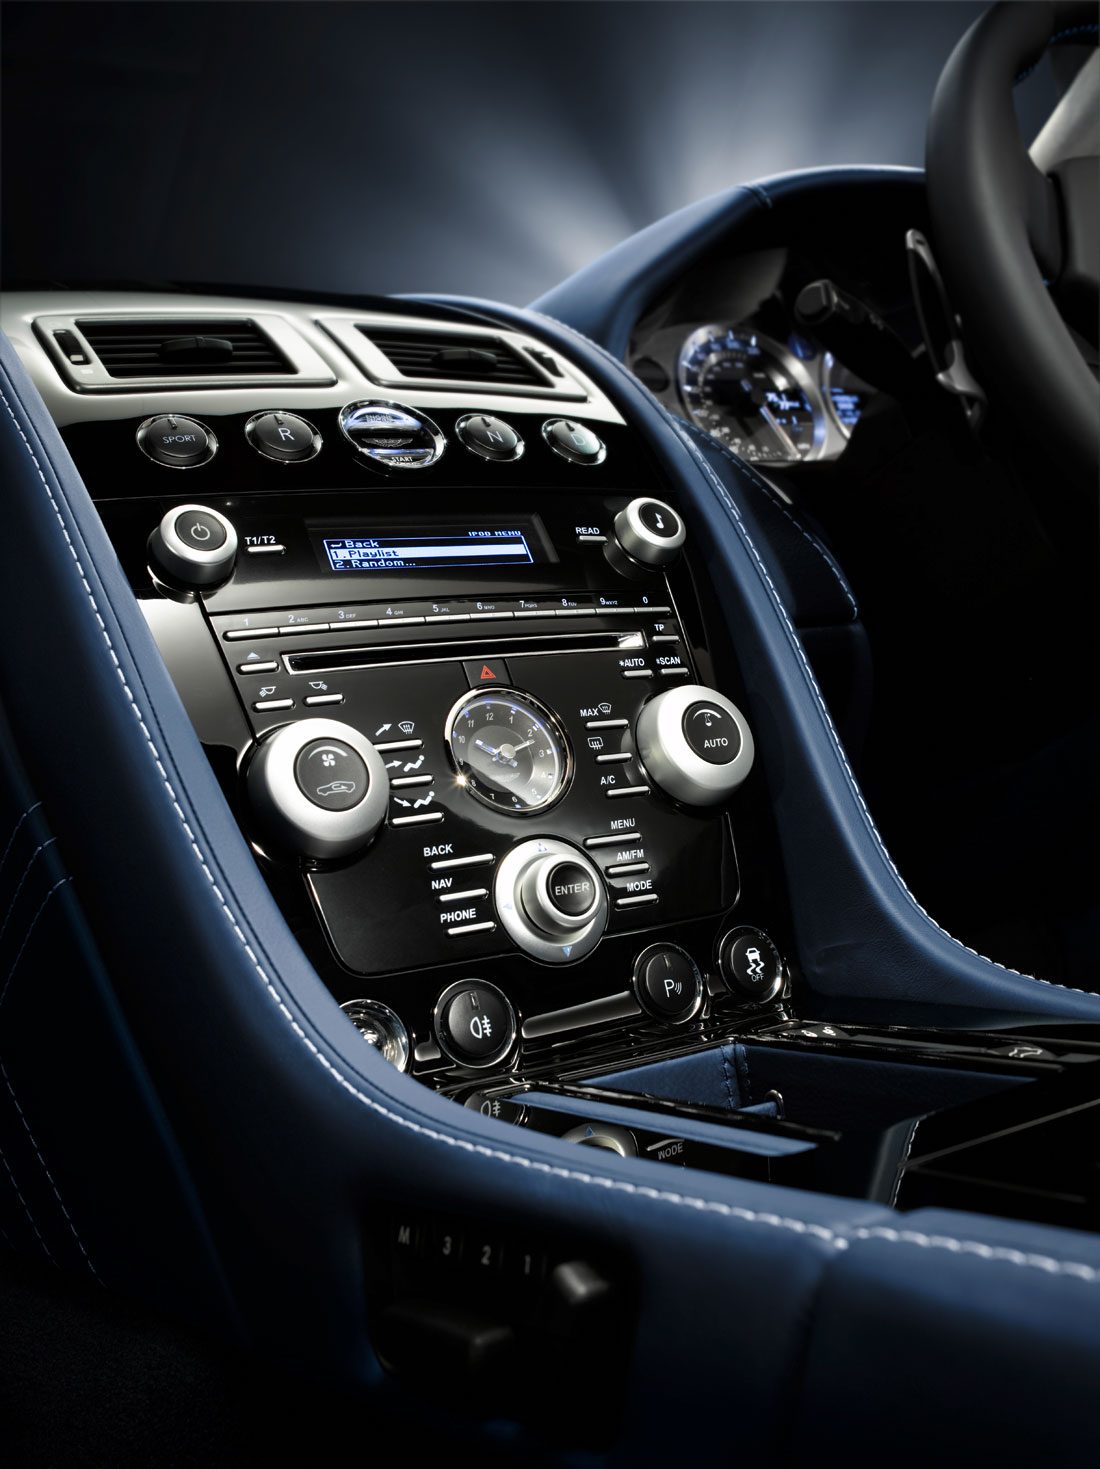 Aston+Martin+V8+Vantage+Interior+Has+Very+Effective+Charging+System-2.jpg